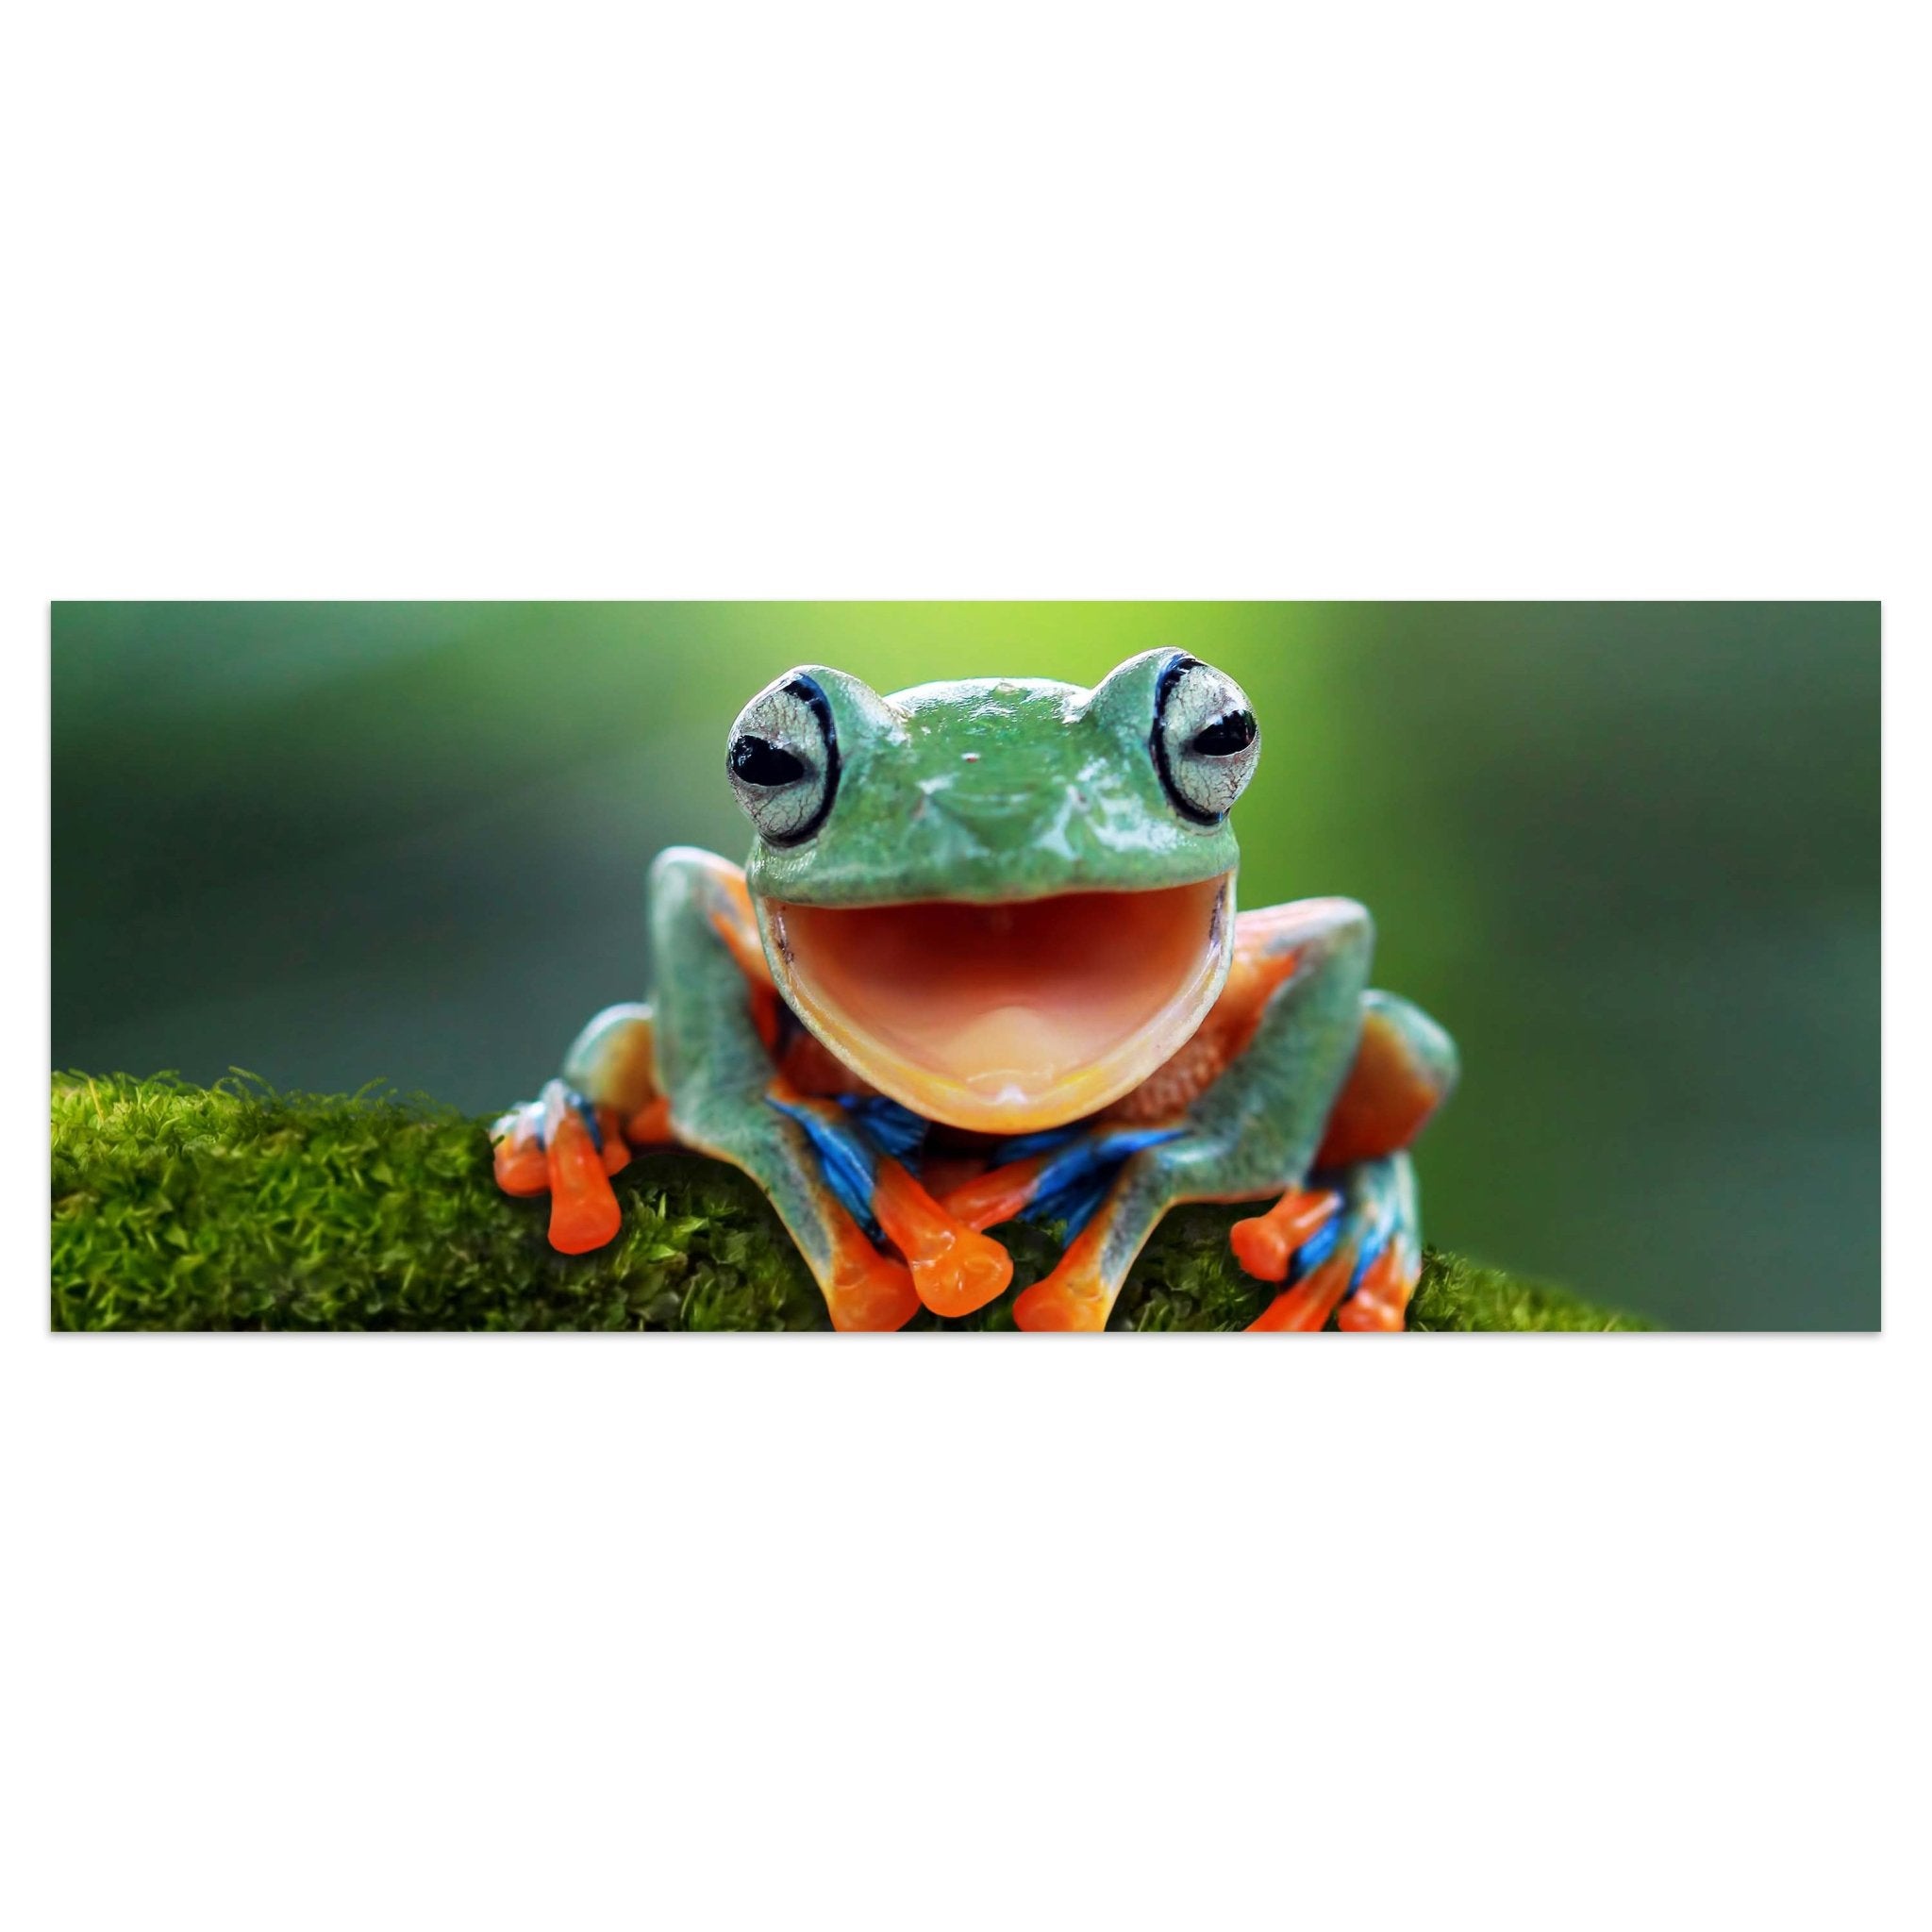 Leinwandbild grüner Frosch, Tier, Moos M1115 kaufen - Bild 1